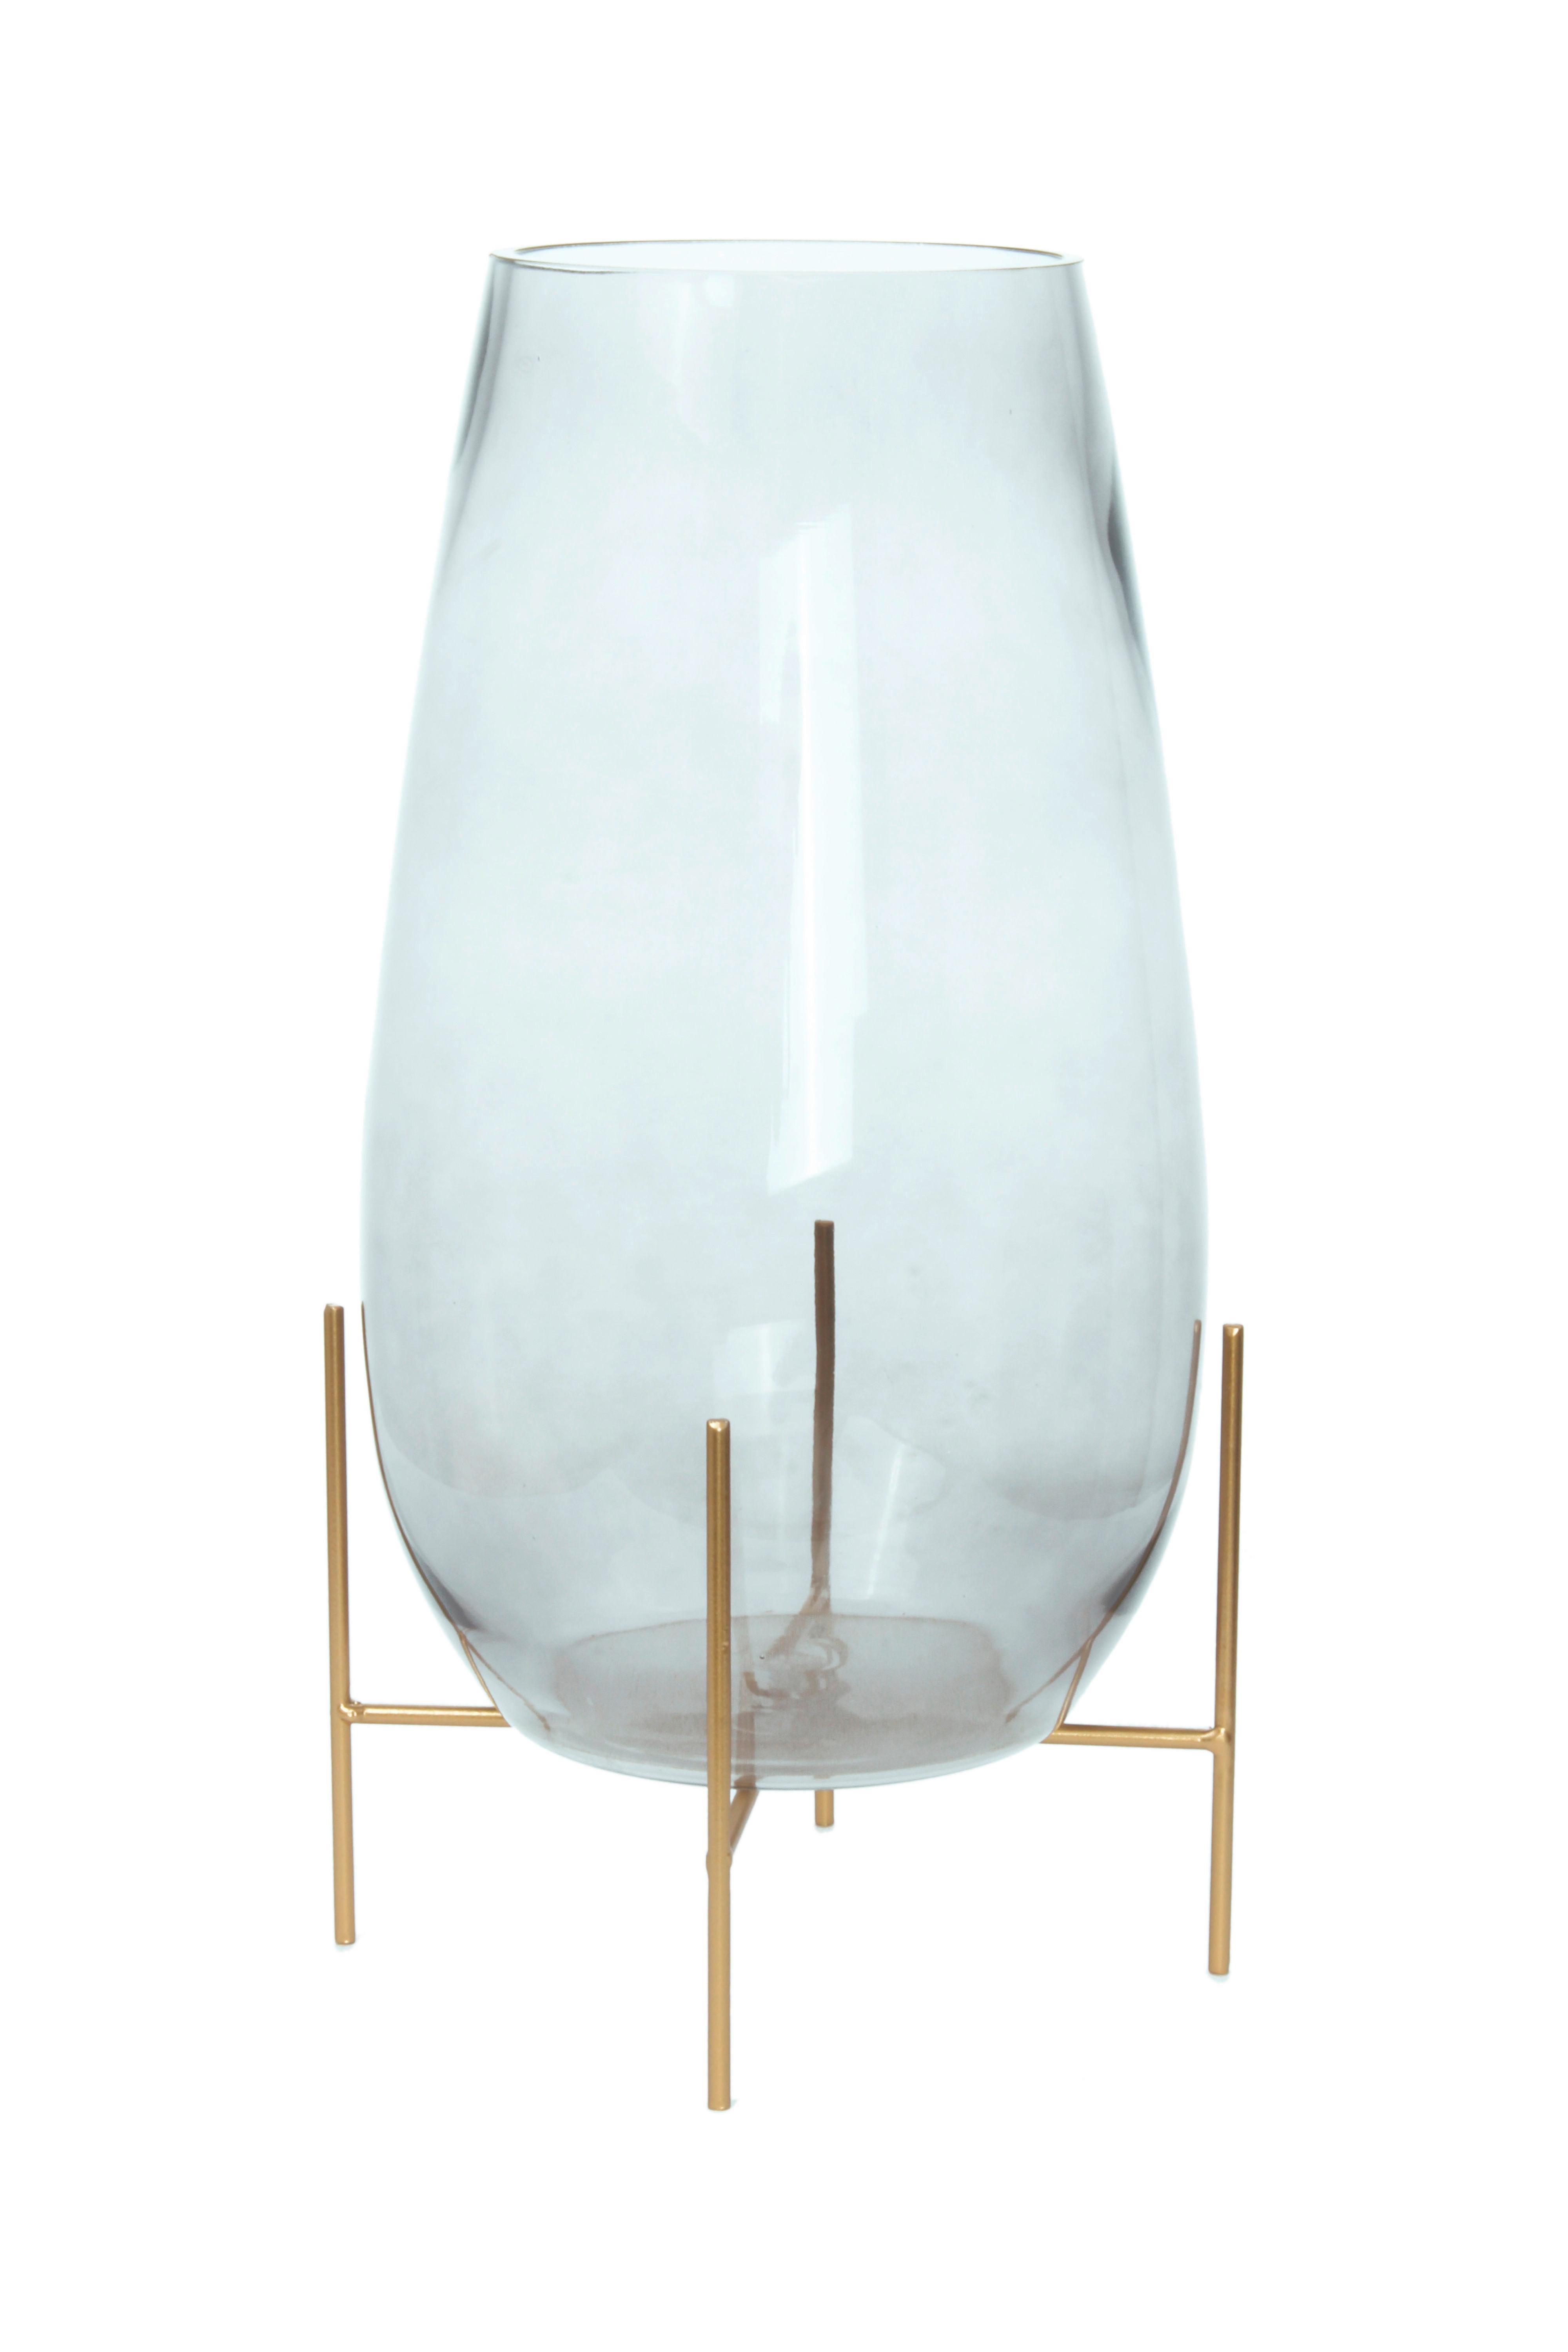 Vase Saigon Bauchig Glas/Eisen Klar/Gold H: 48,5 cm - Klar, Design, Glas/Metall (25/48,5/25cm)